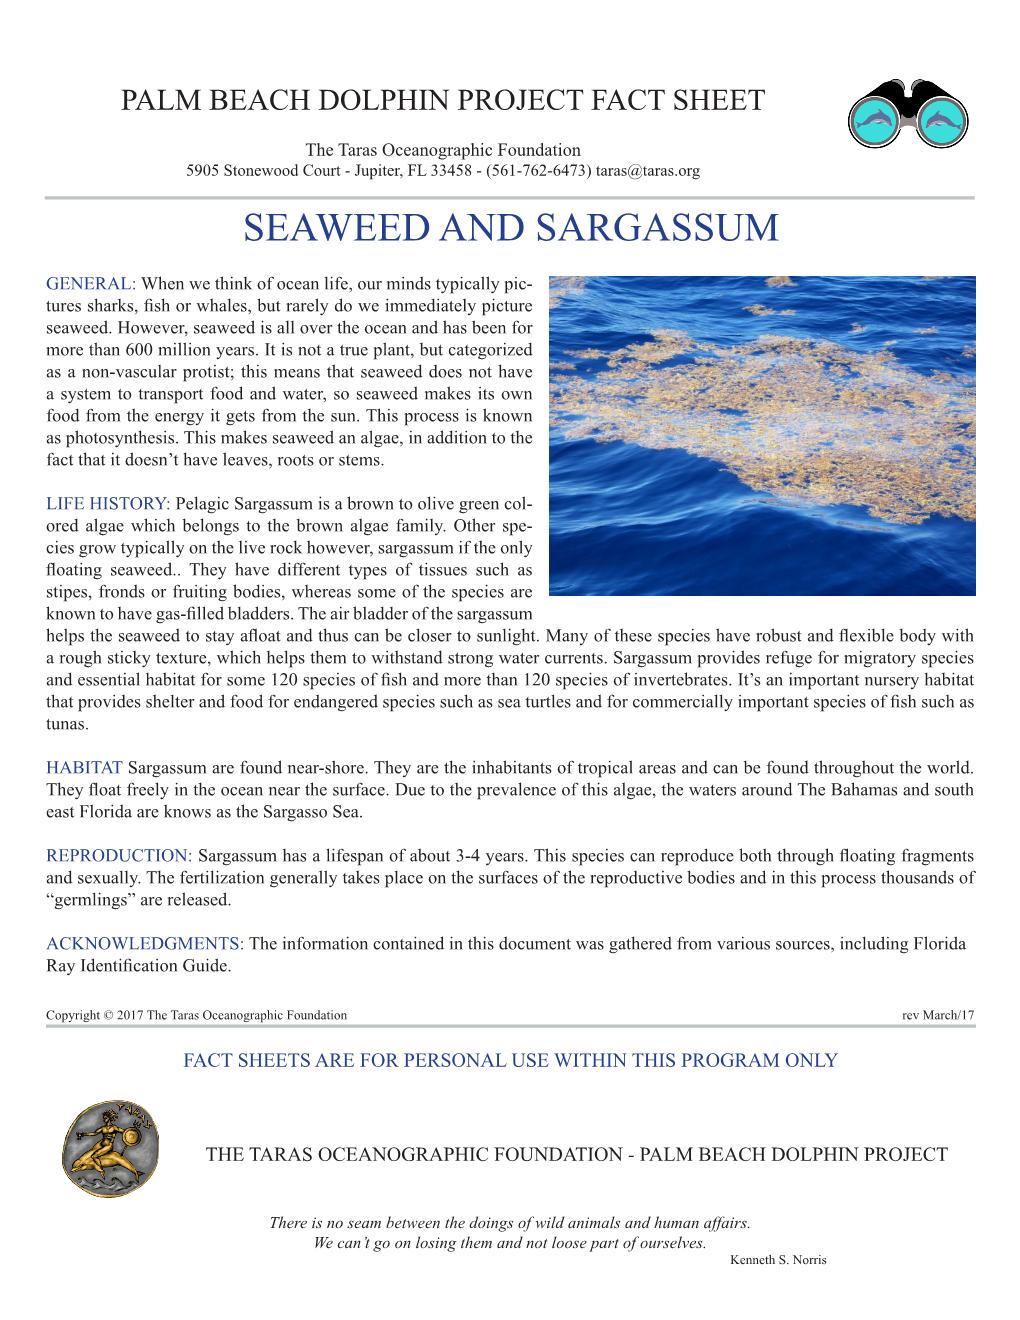 Seaweed and Sargassum